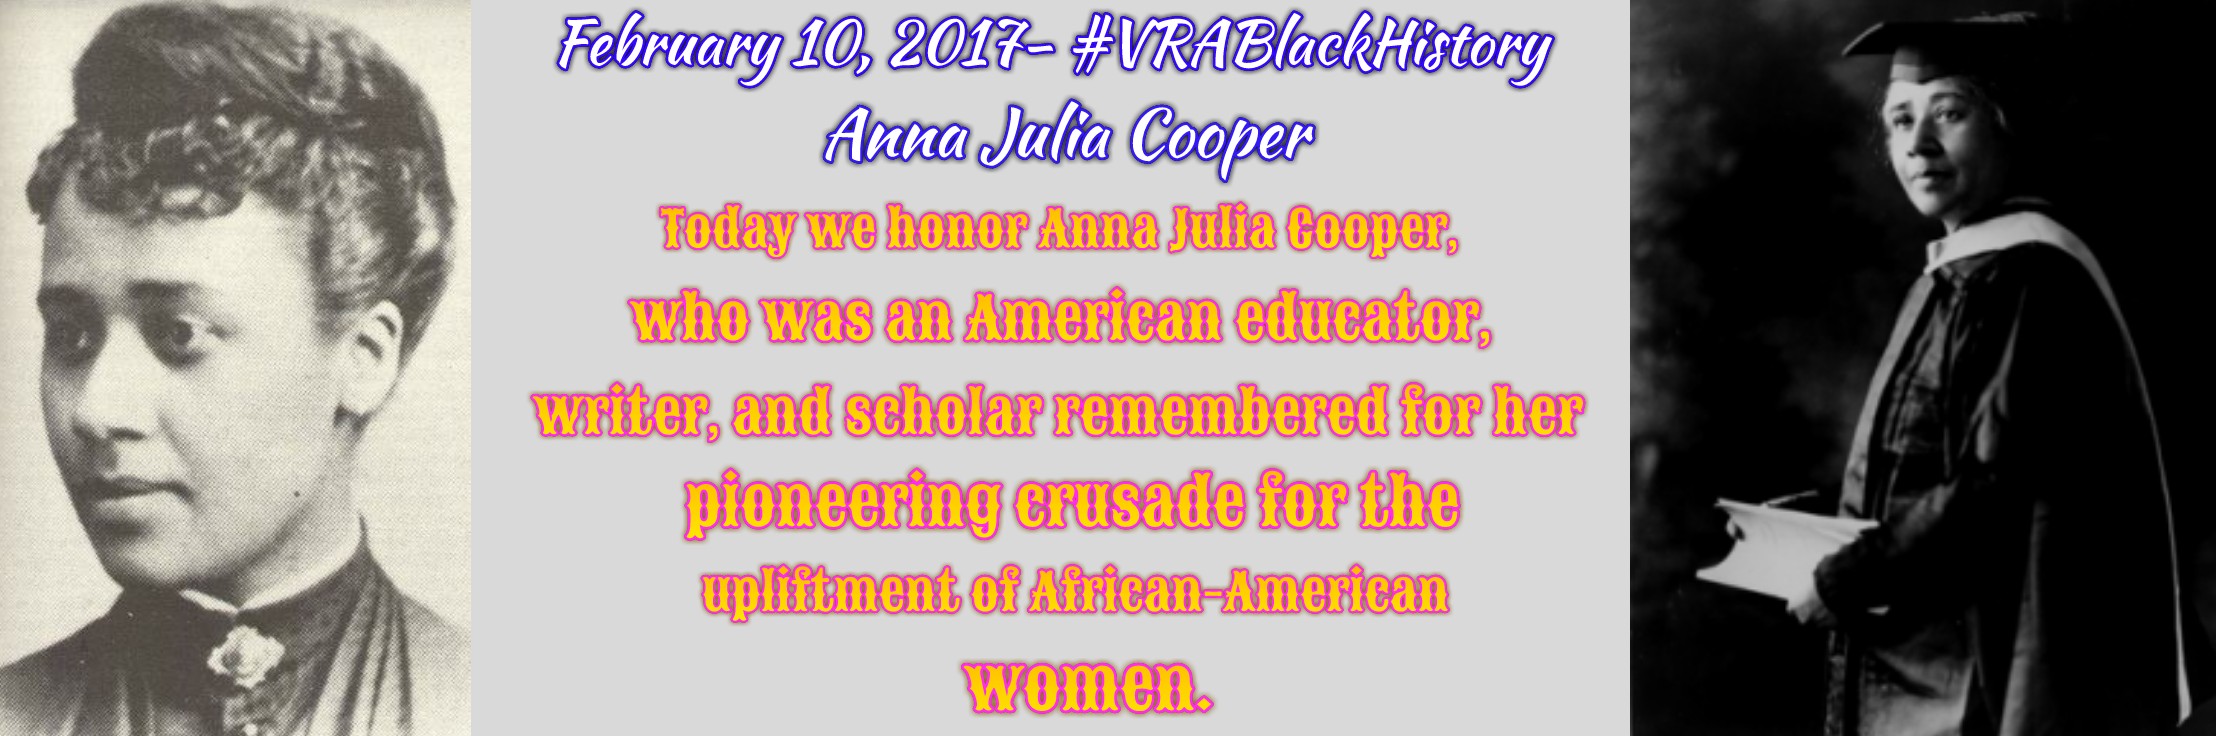 February 10, 2017- Anna Julia Cooper (1858-1964) #VRABlackHistory